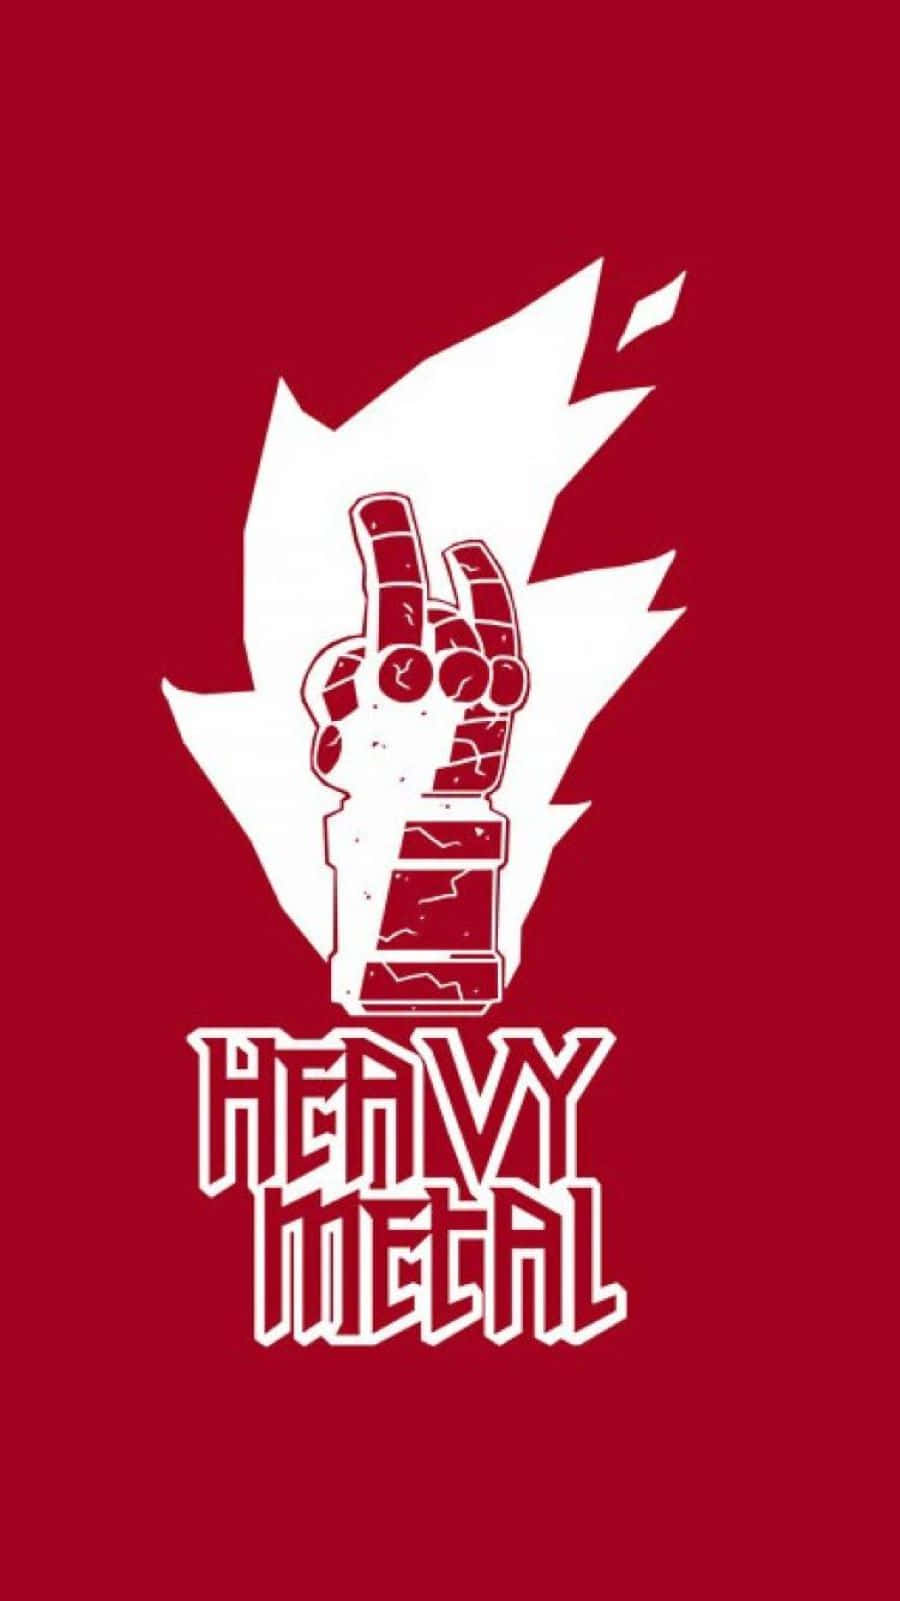 Join the Heavy Metal Music Revolution" Wallpaper